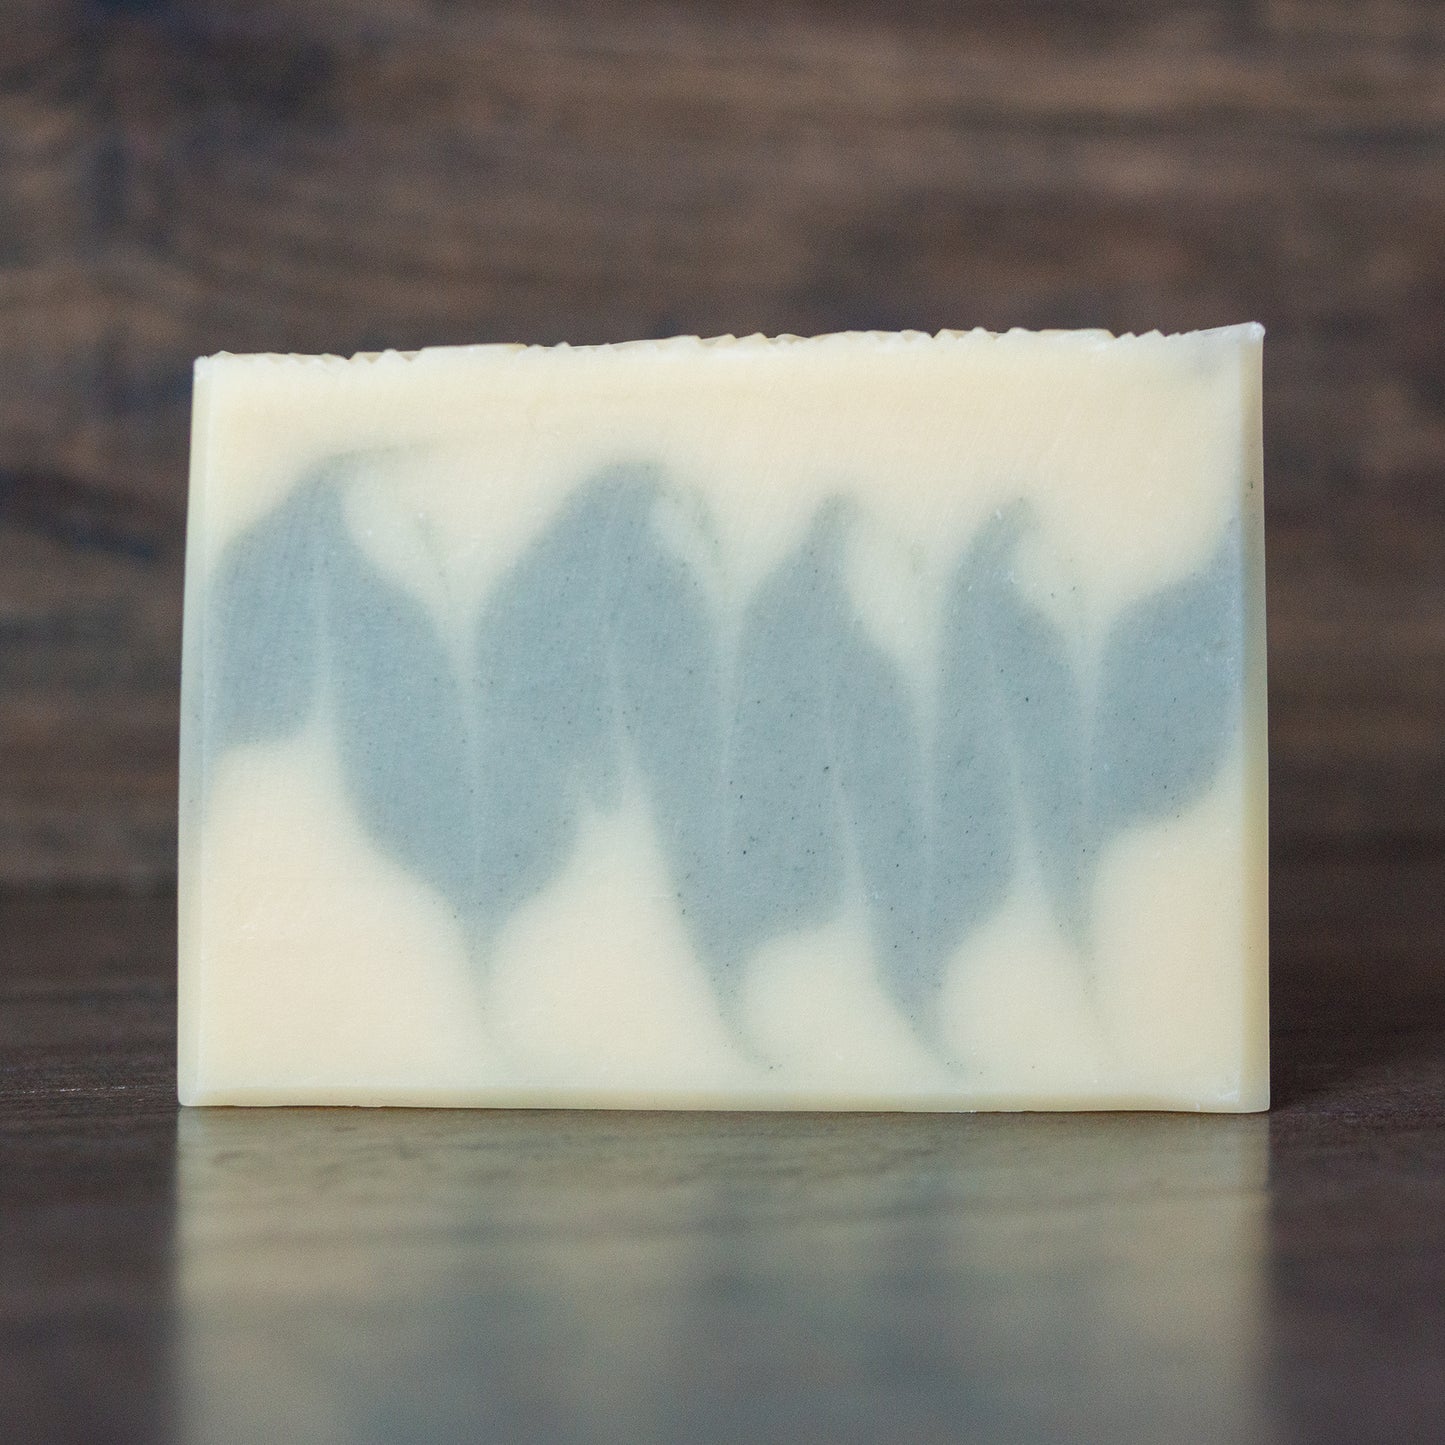 Windward Way // Lavender Mint Coconut Milk Soap